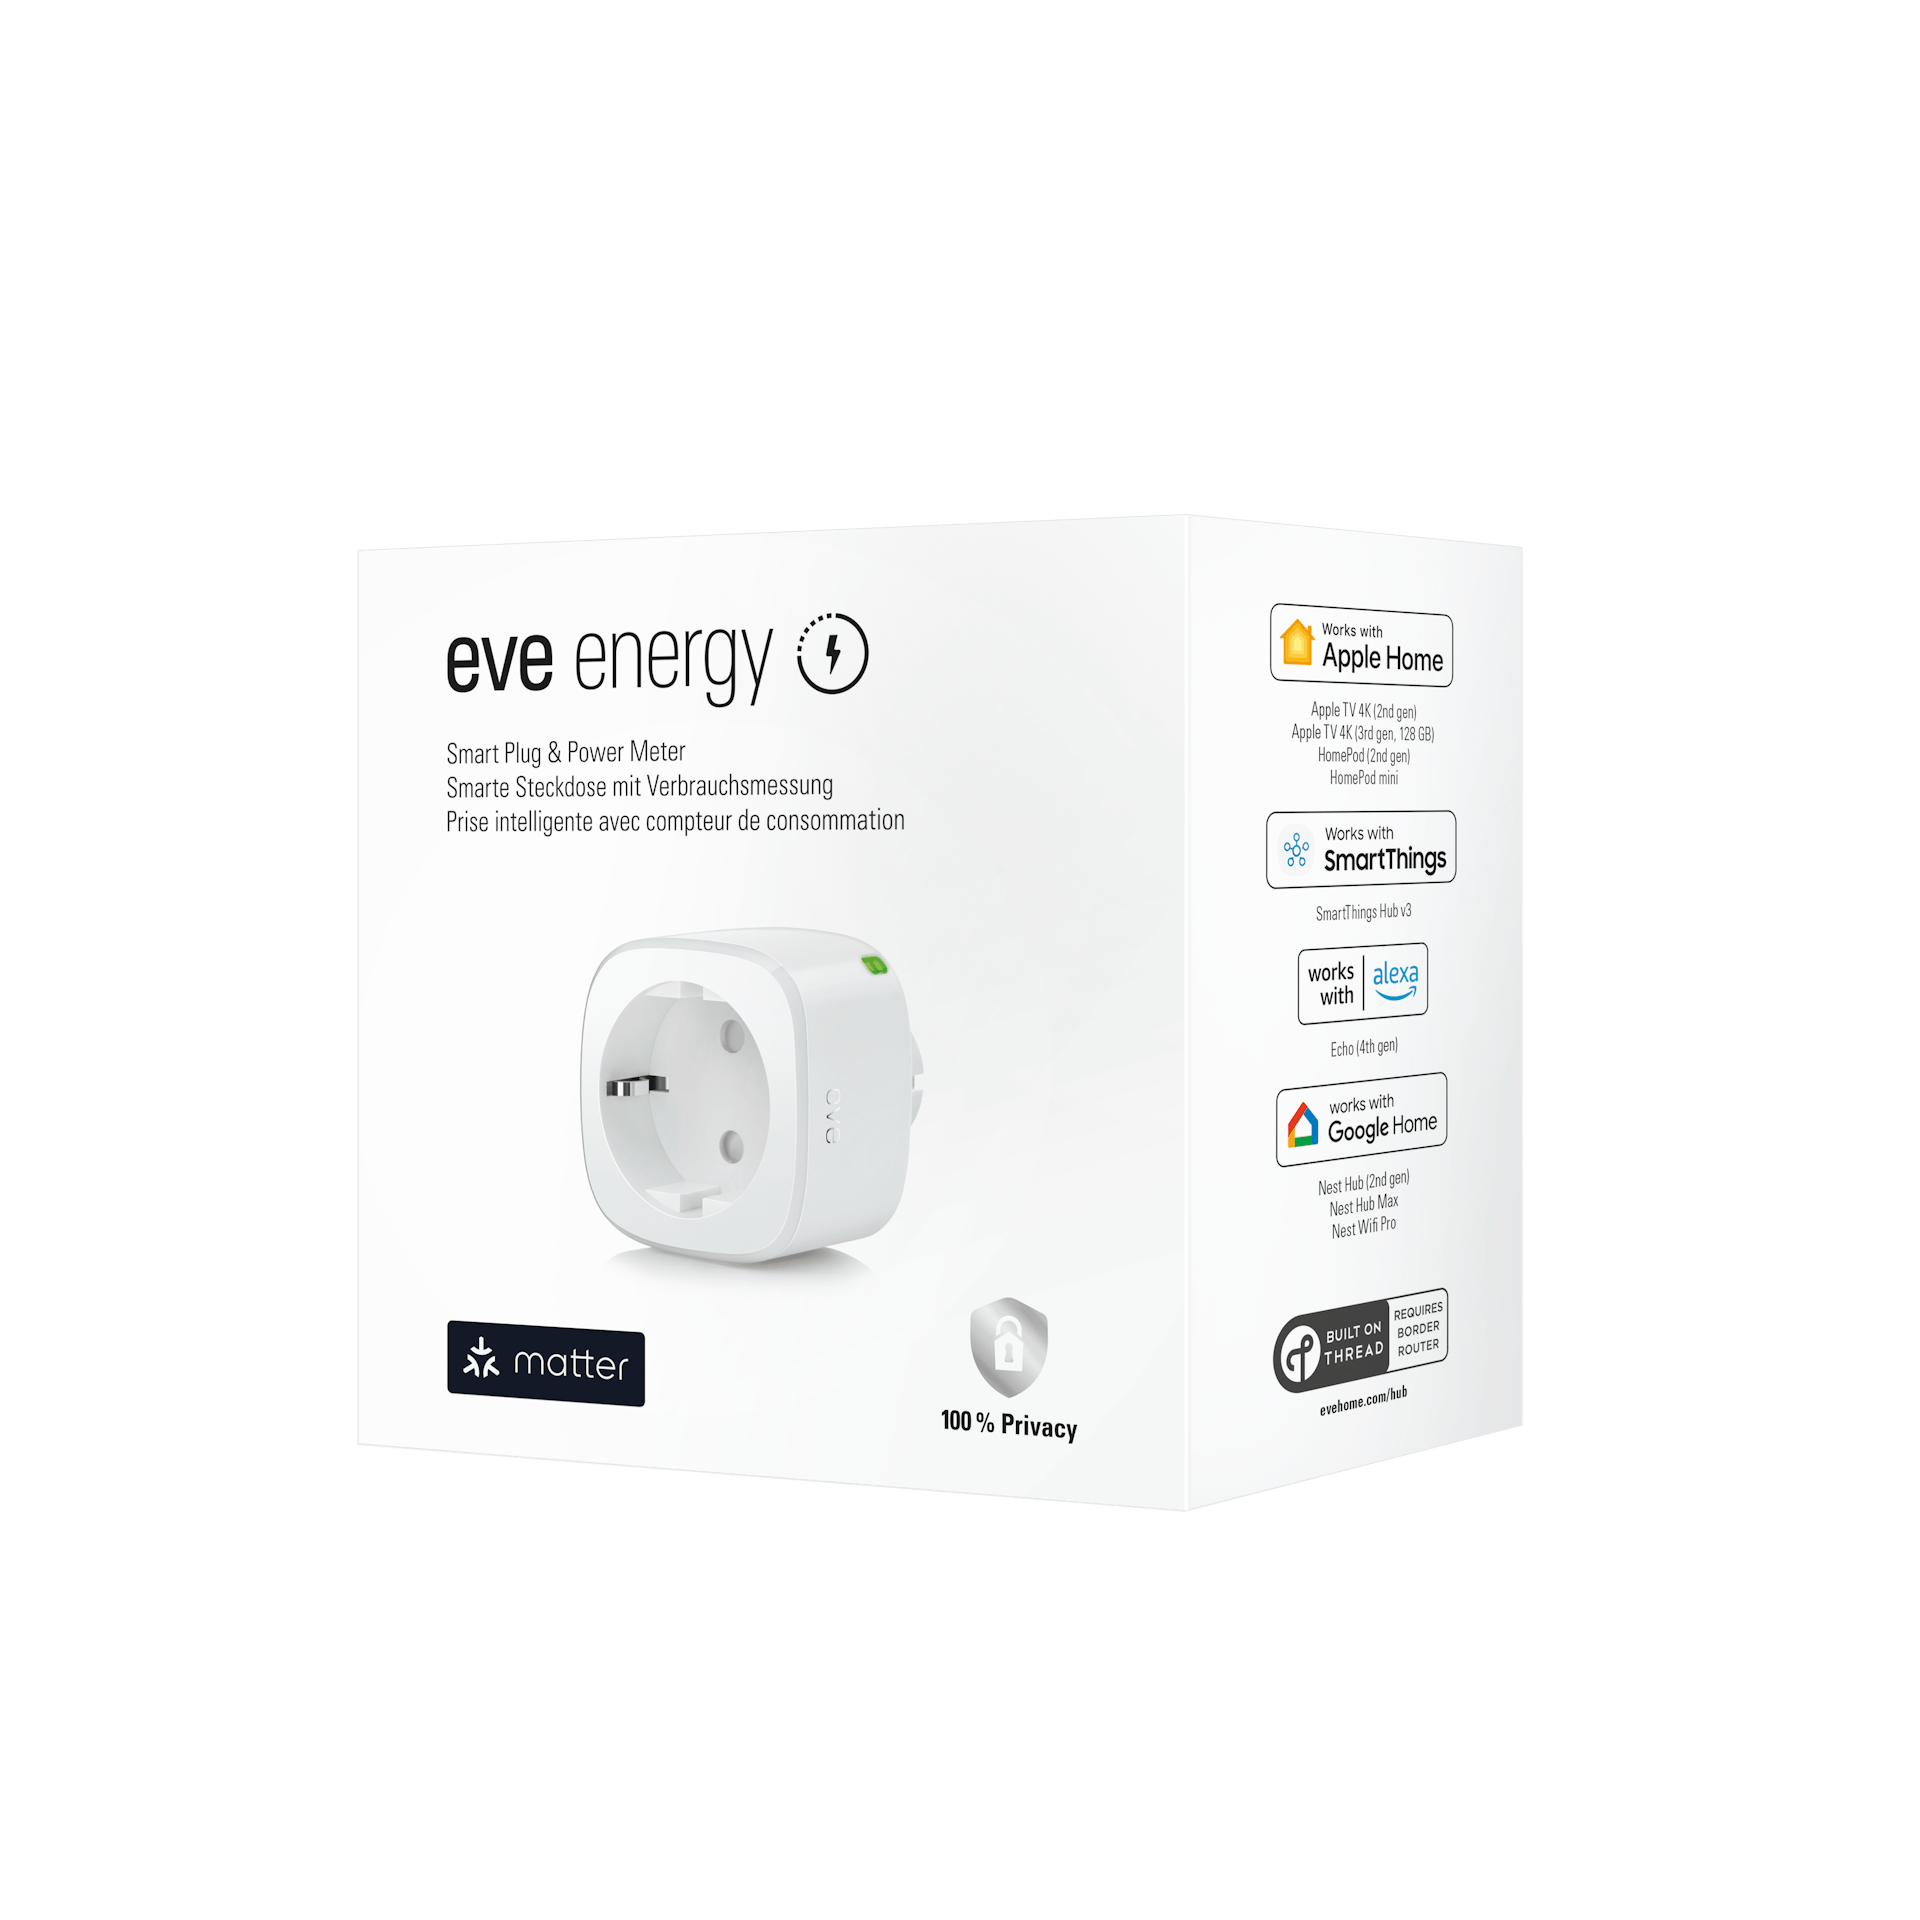 Eve Energy - Image Details